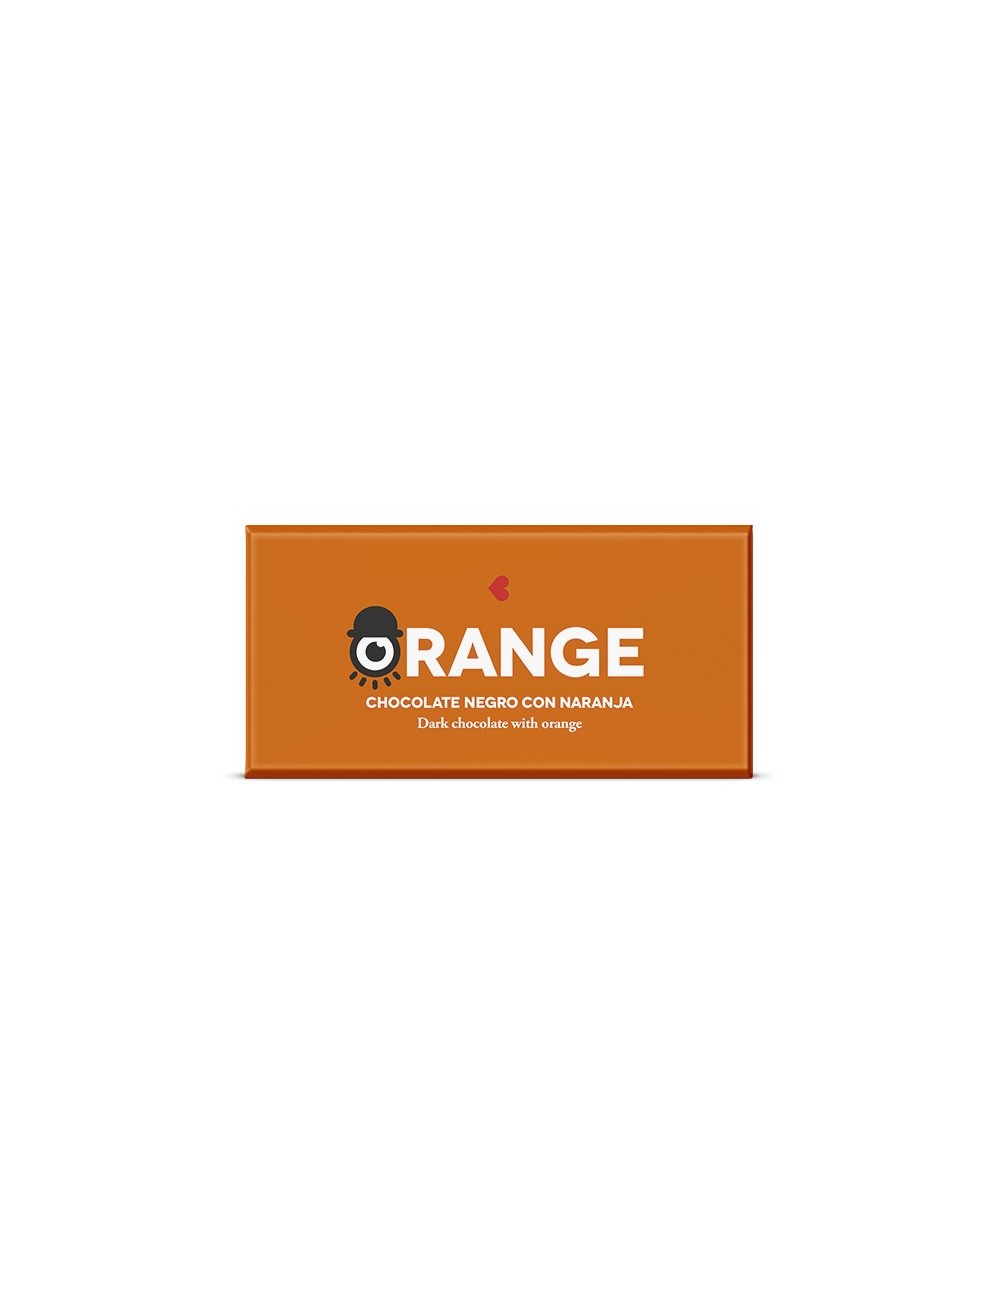 Orange. Chocolate negro con naranja Young and Beautifood